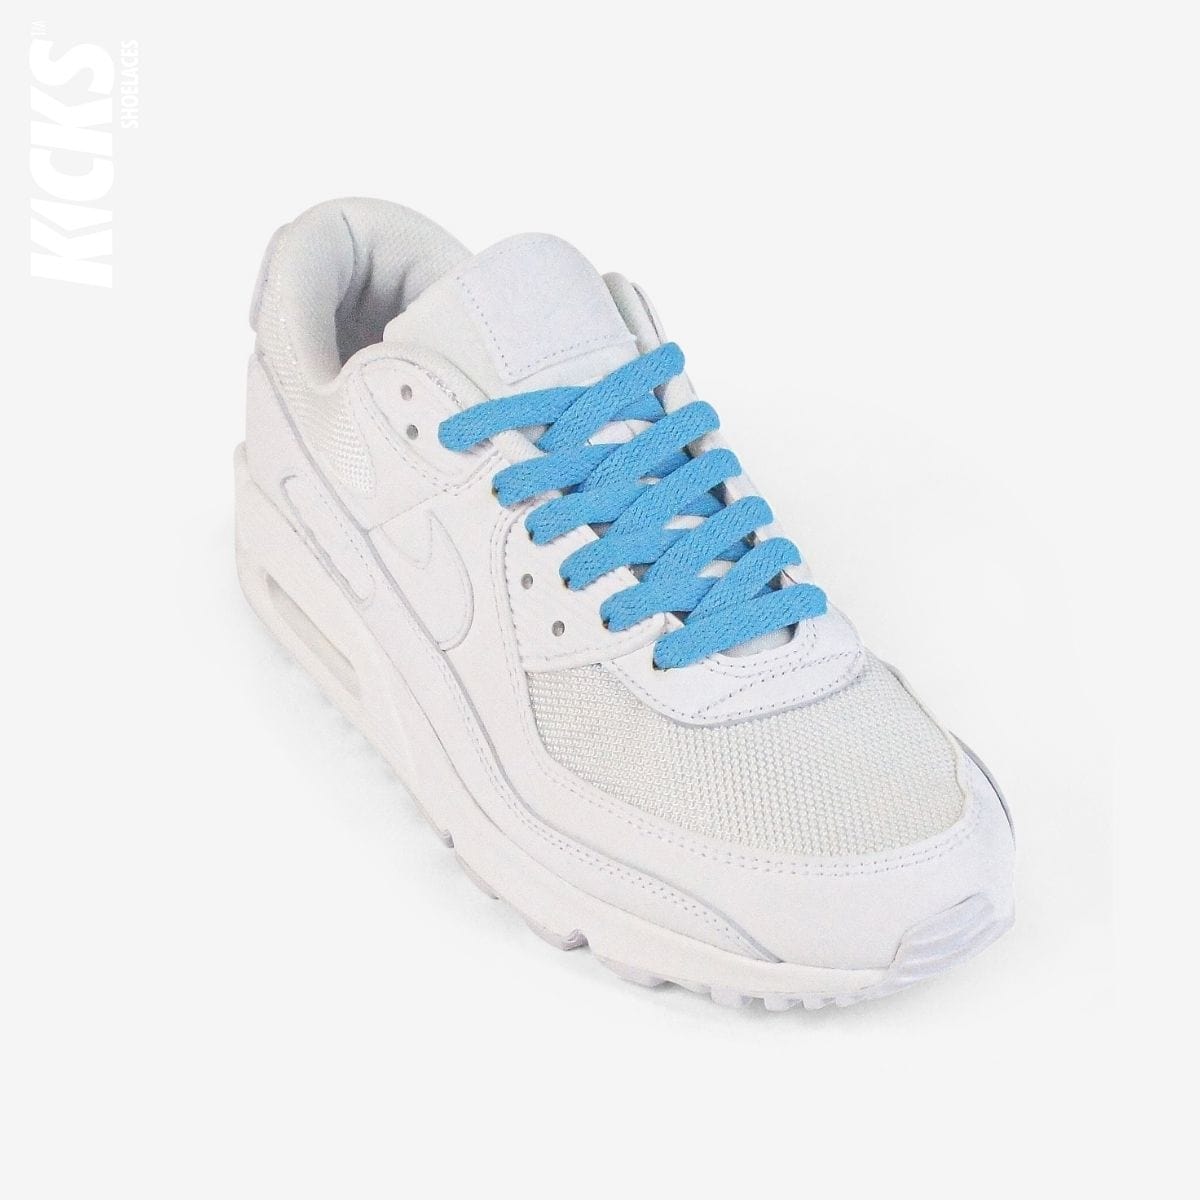 novelty-shoelaces-on-white-sneaker-using-kids-spearmint-blue-flat-shoelaces